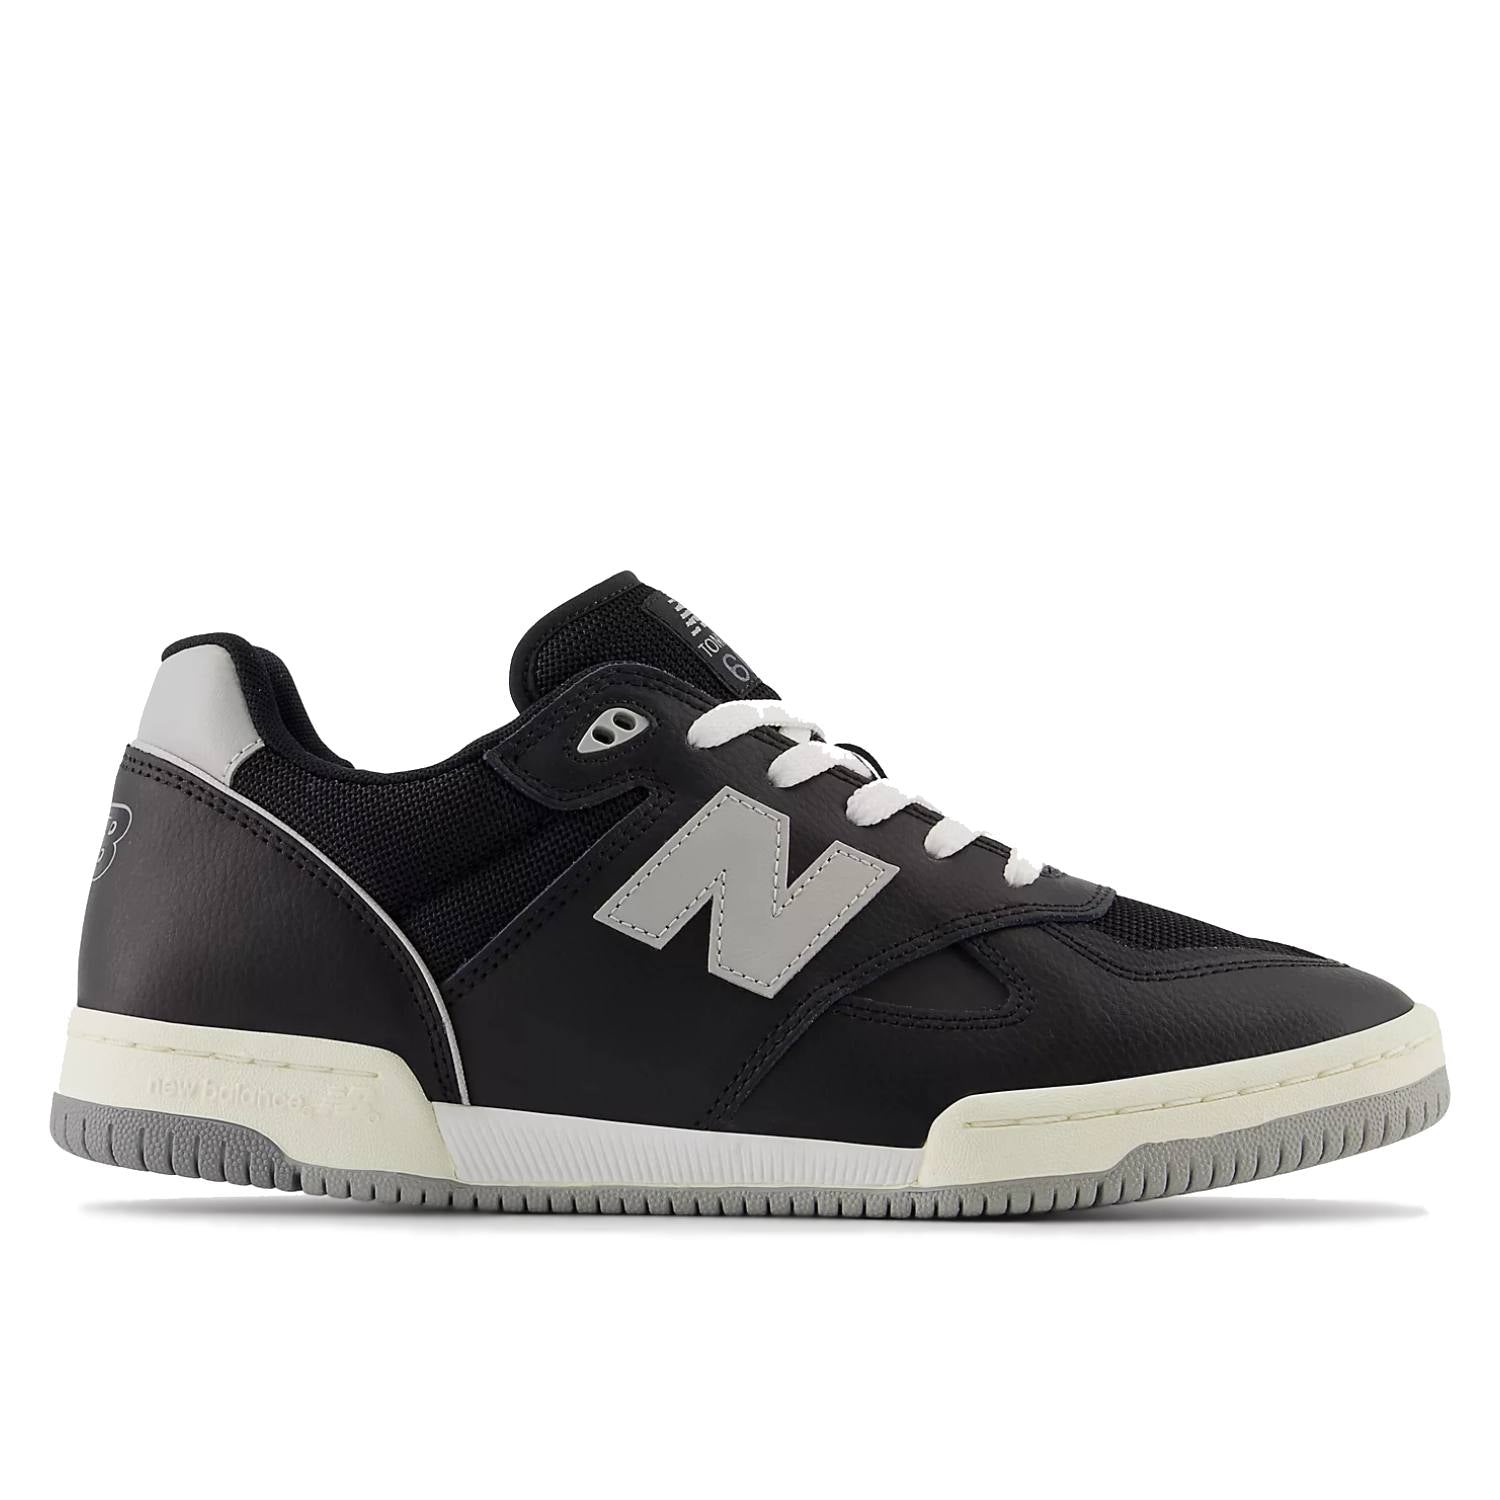 New Balance Numeric - 600 - BBW Tom Knox skate shoe black white grey